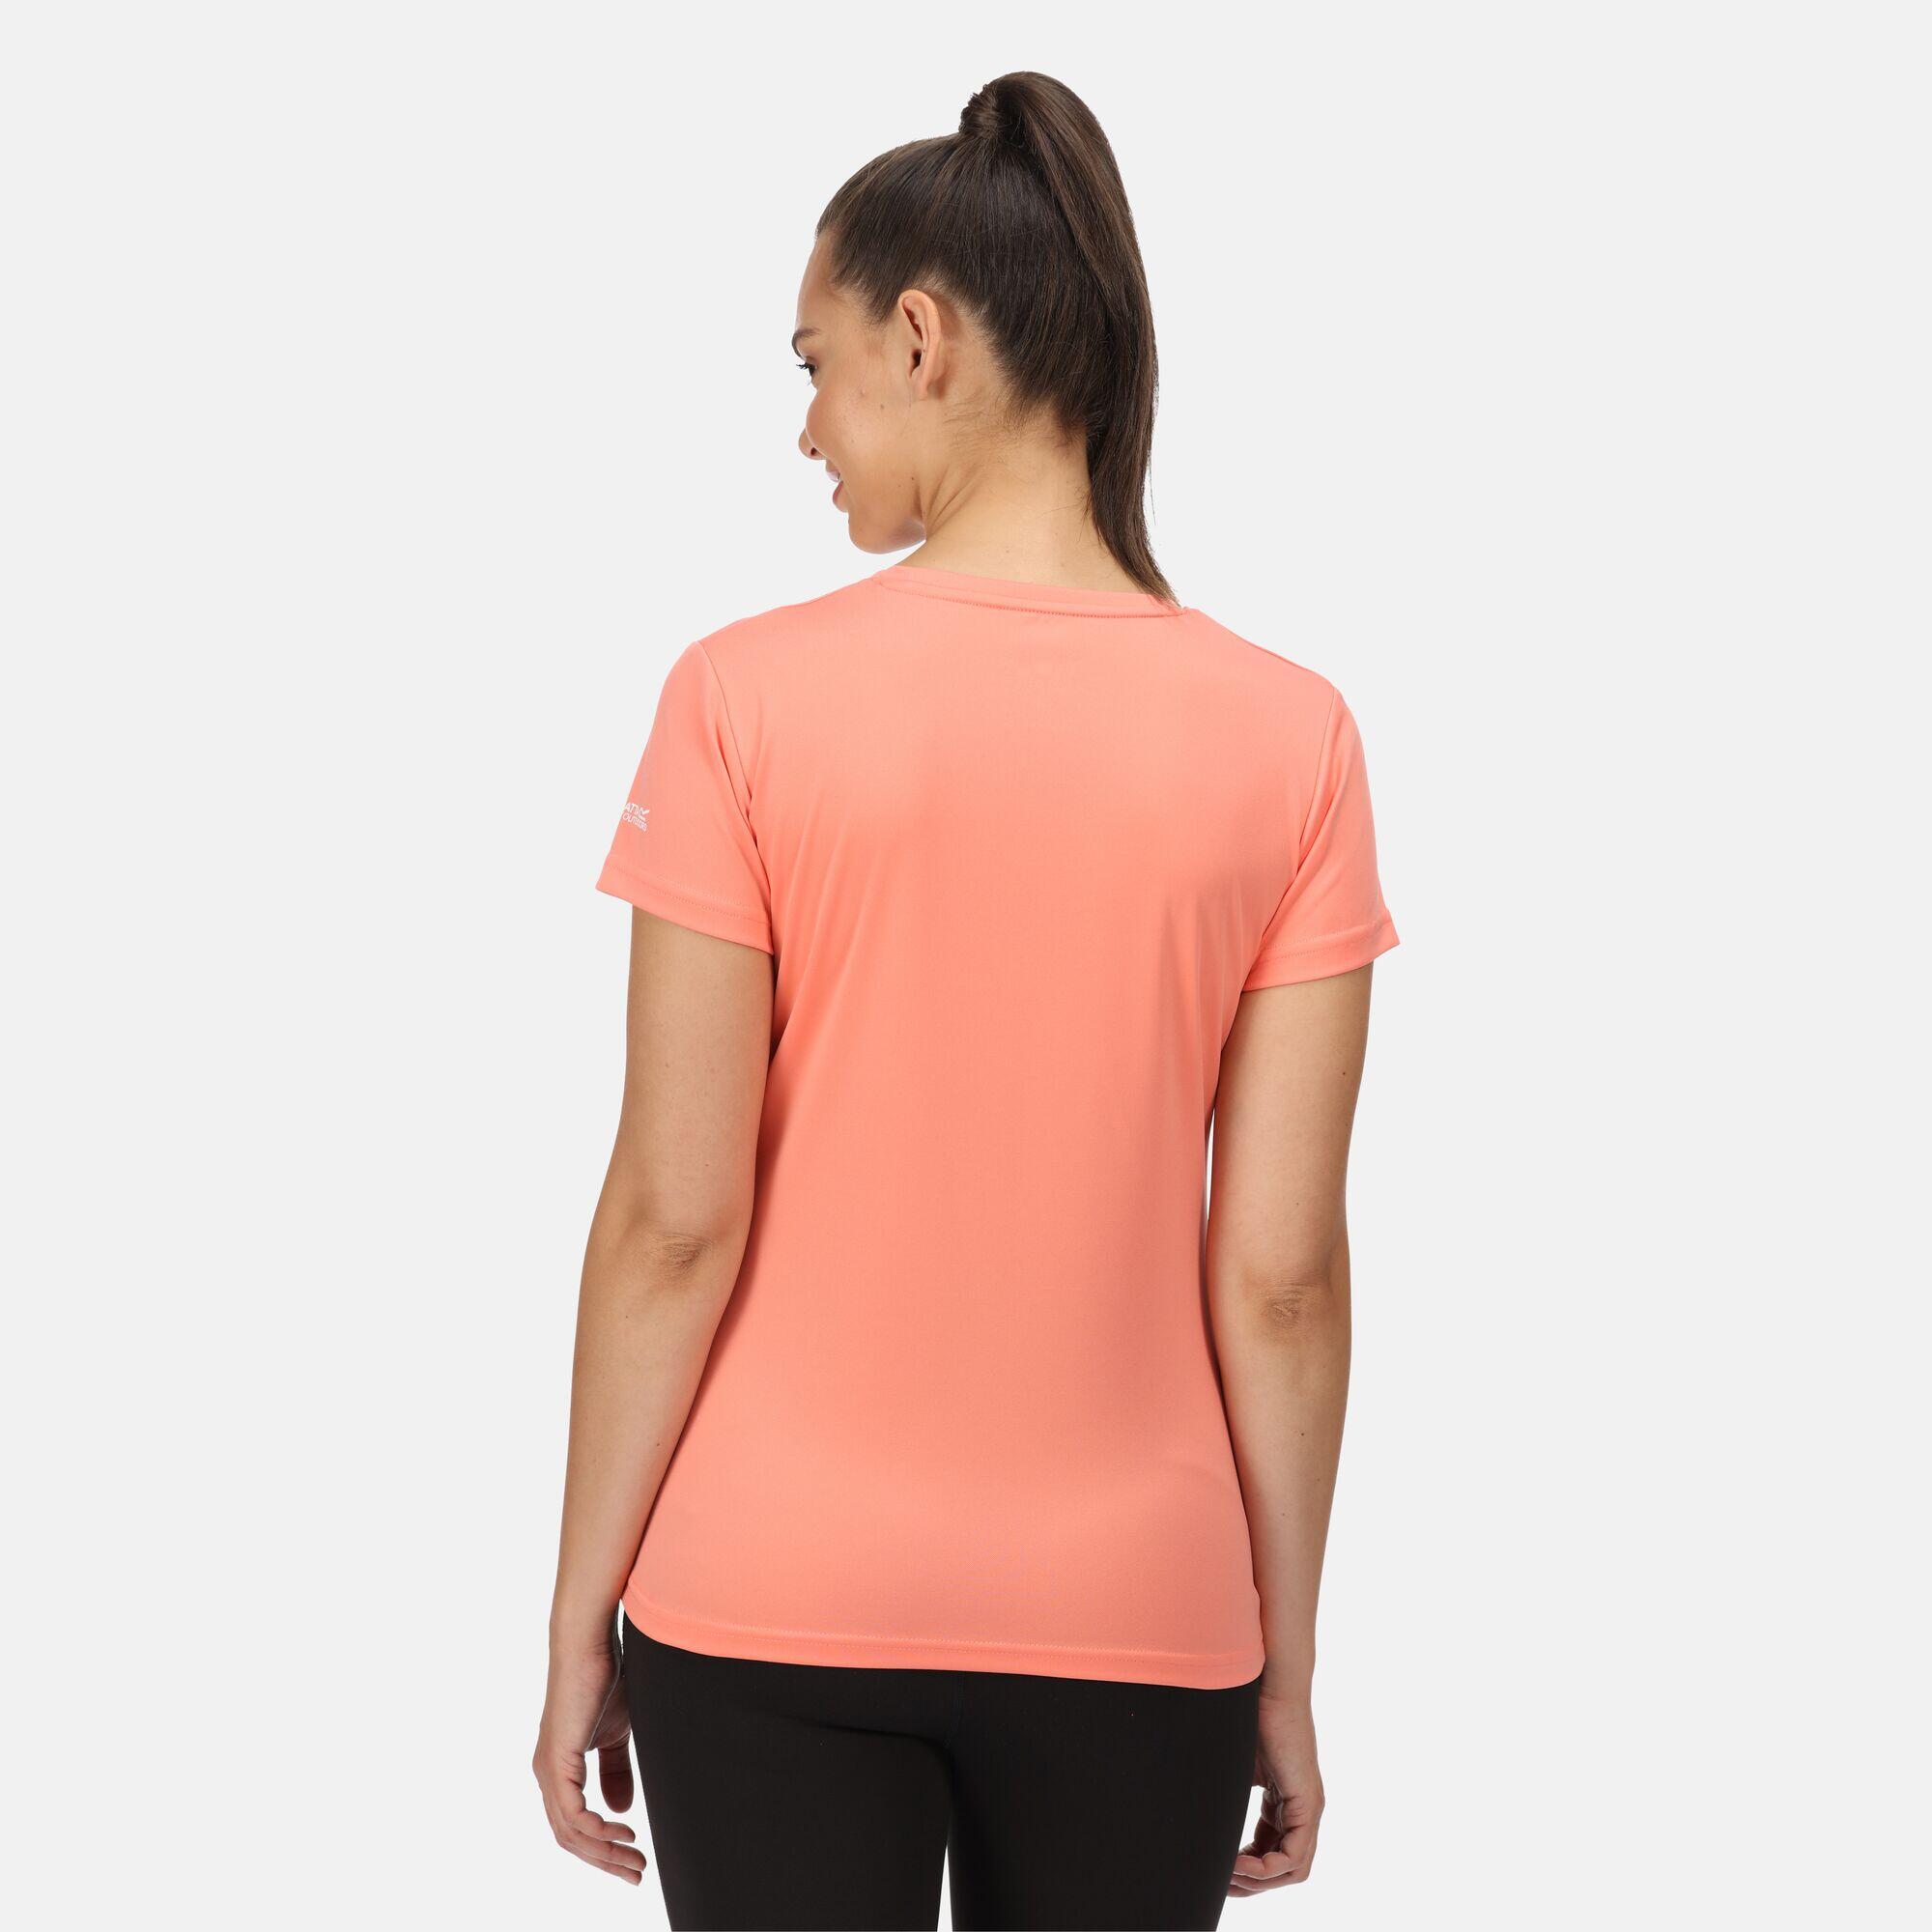 Fingal VI Women's Walking T-Shirt - Pink Coral 2/5